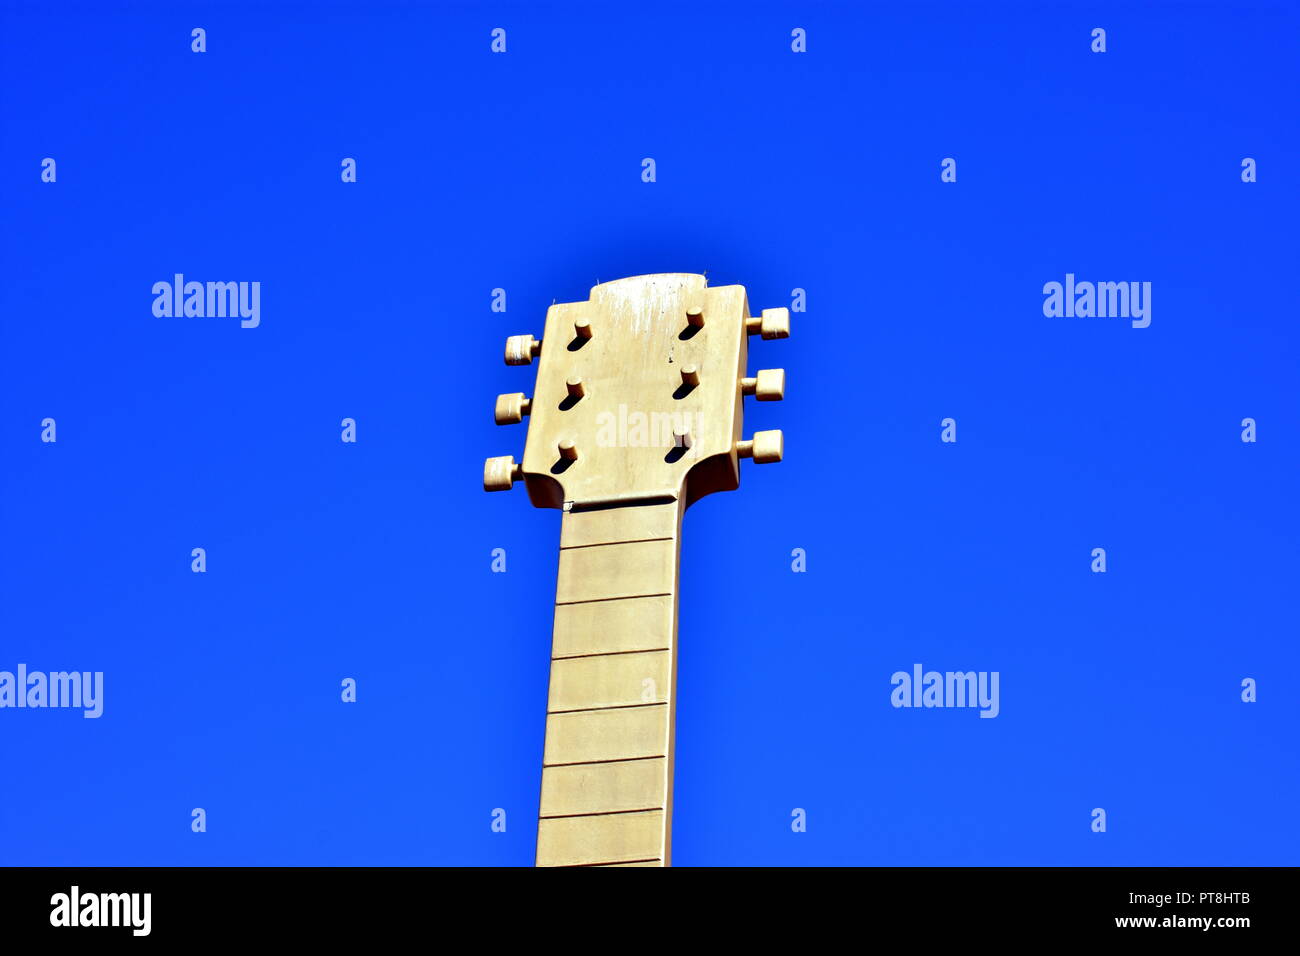 Golden guitar. Stock Photo